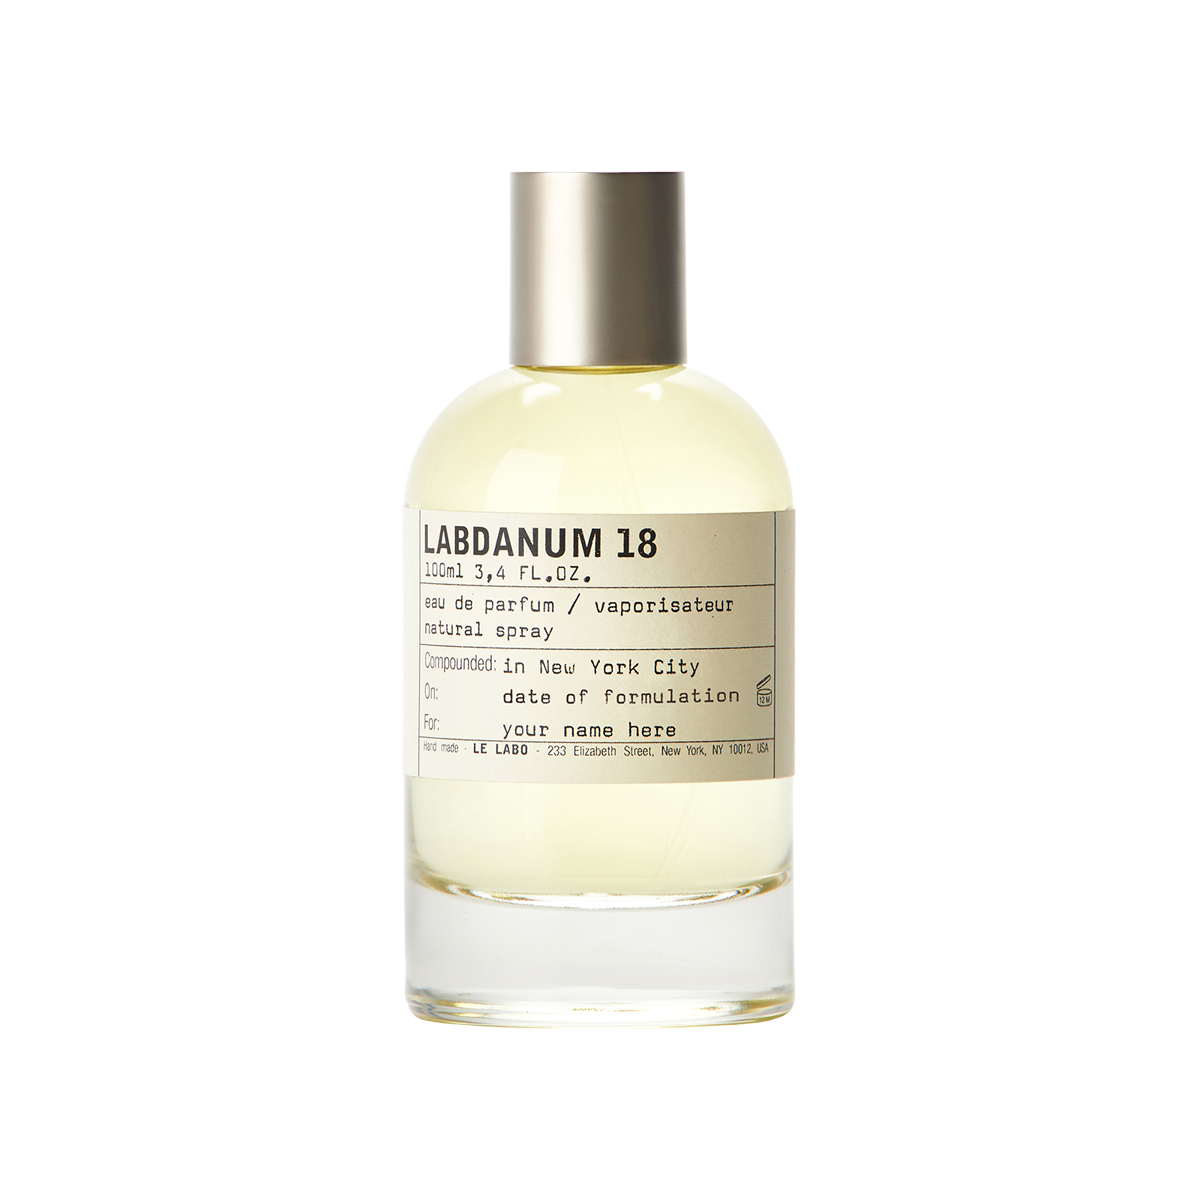 Le Labo fragrances - Labdanum 18 Perfume